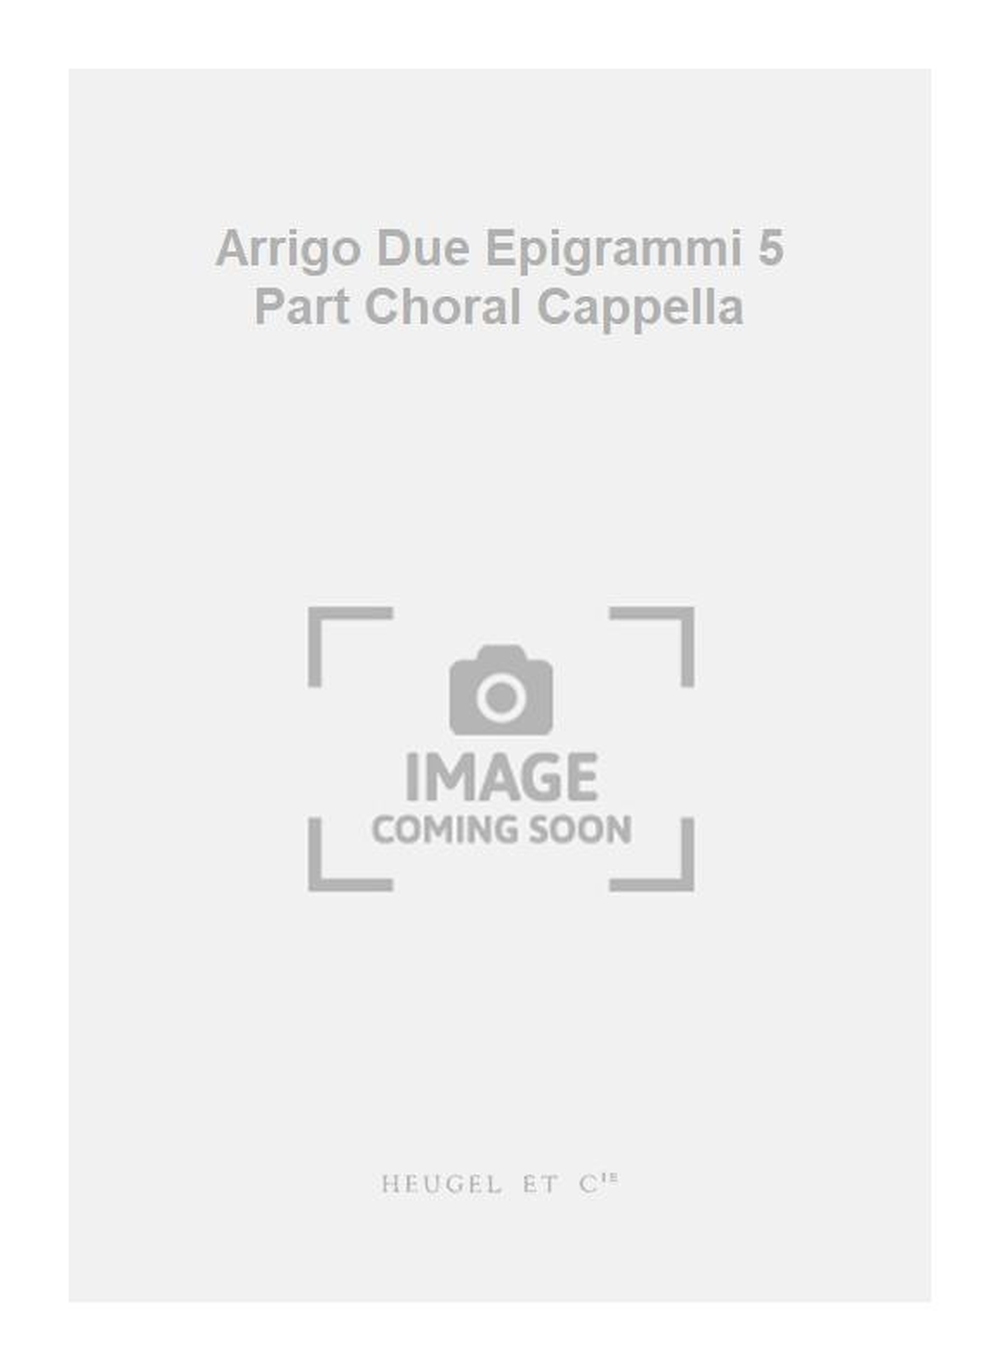 G. Arrigo: Arrigo Due Epigrammi 5 Part Choral Cappella